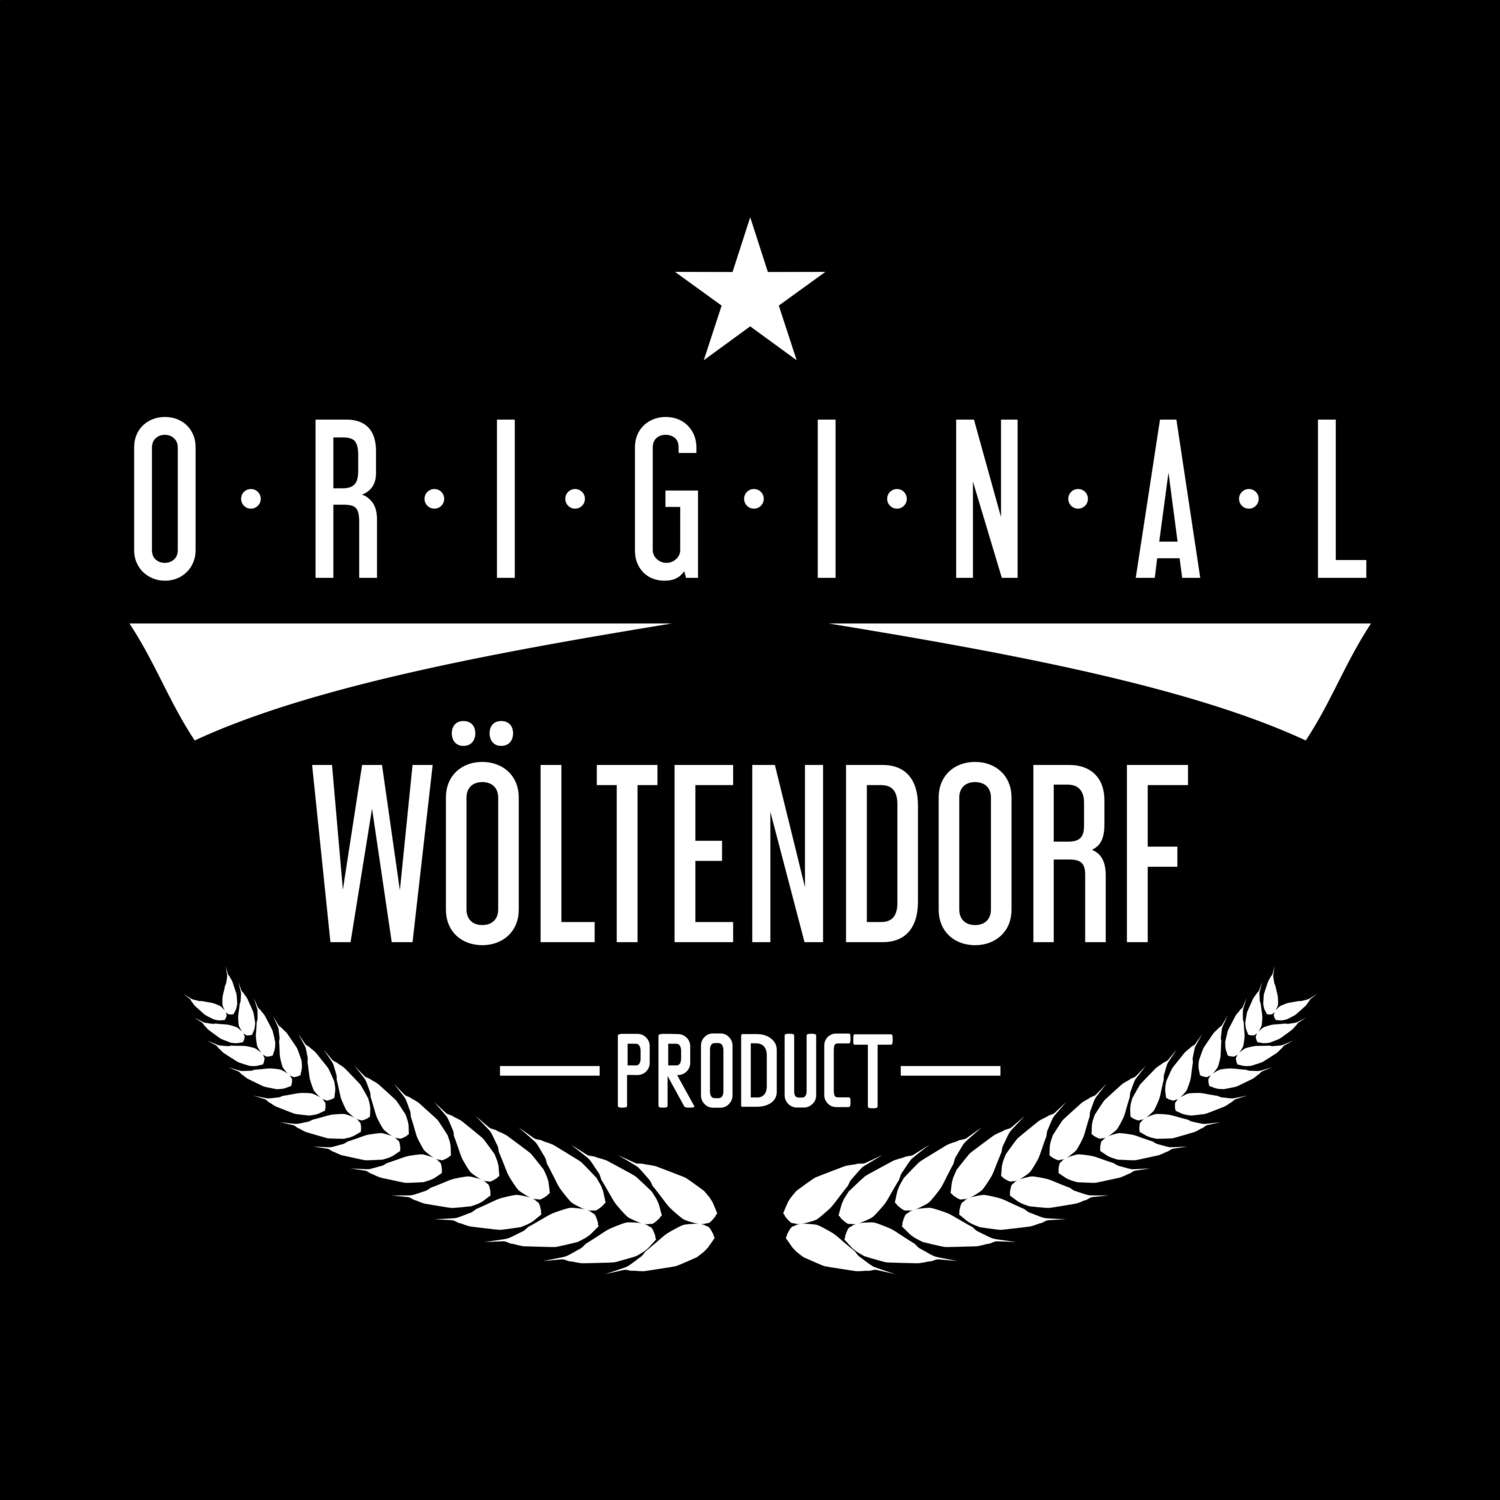 Wöltendorf T-Shirt »Original Product«